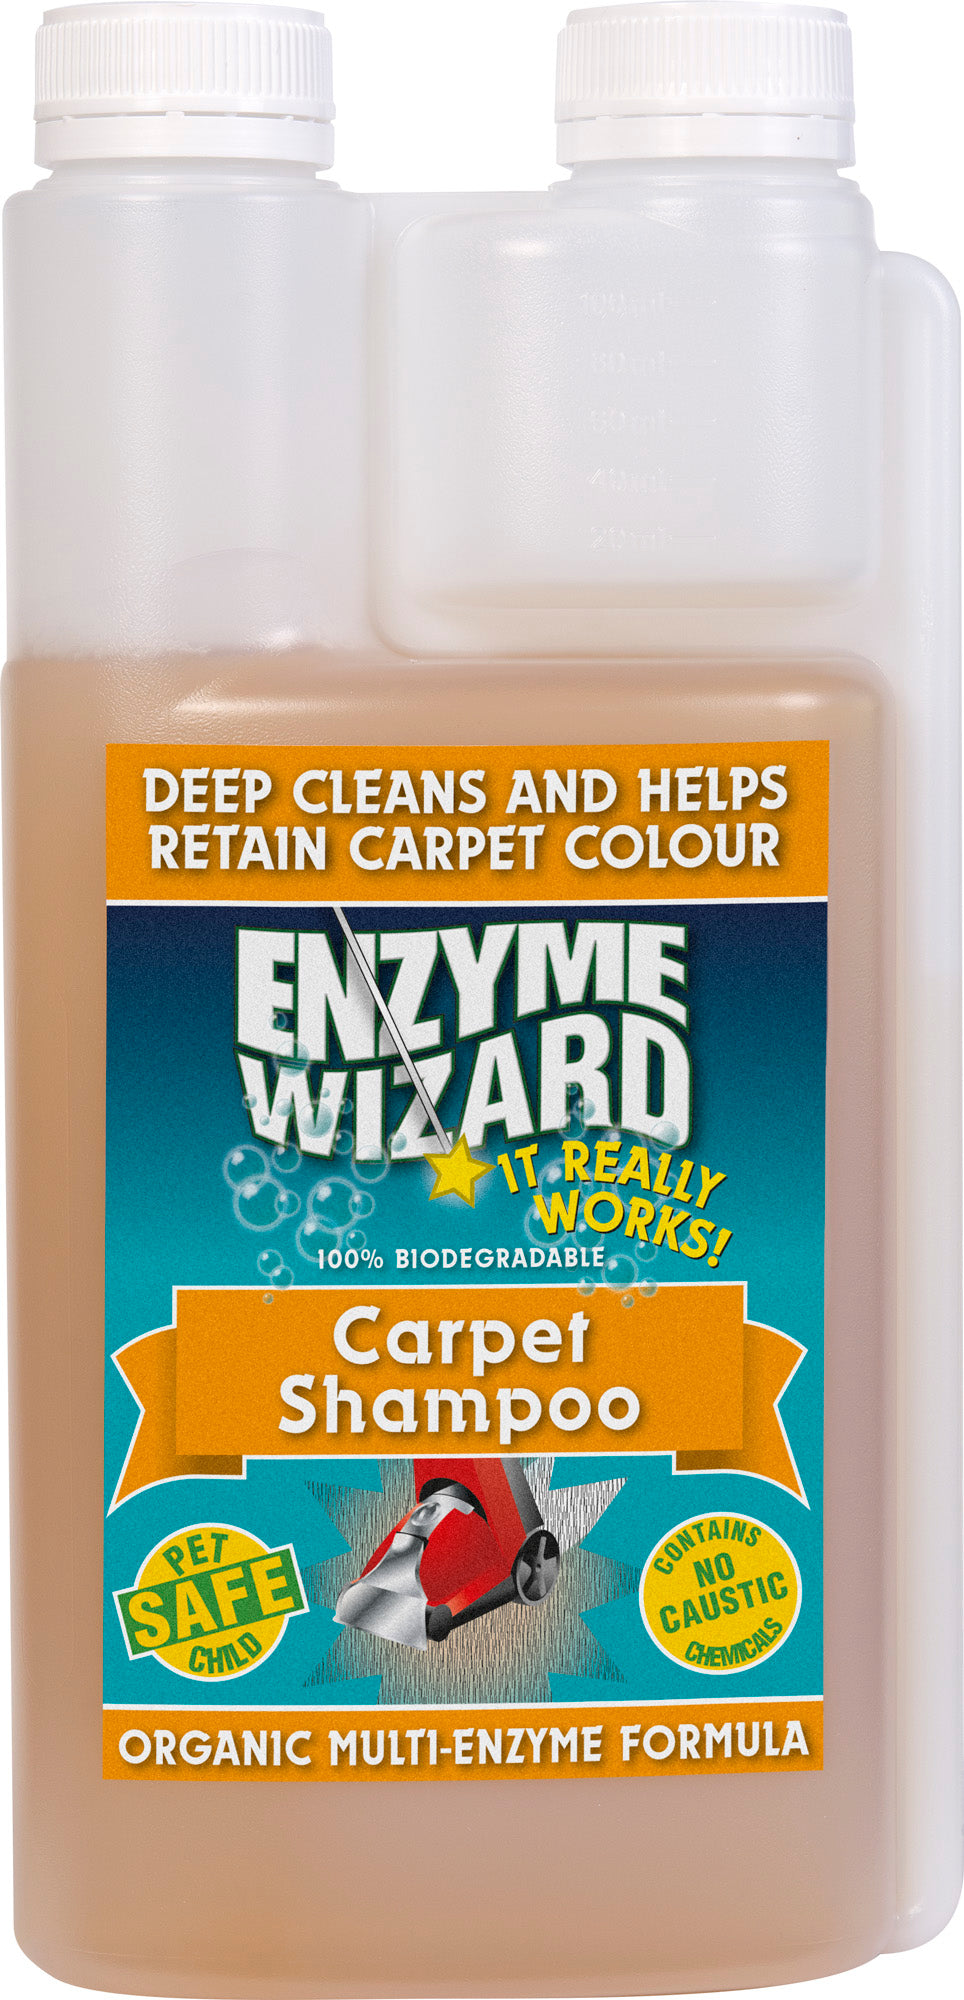 Enzyme Wizard Carpet Shampoo 1 Ltr Twin Filta Nz